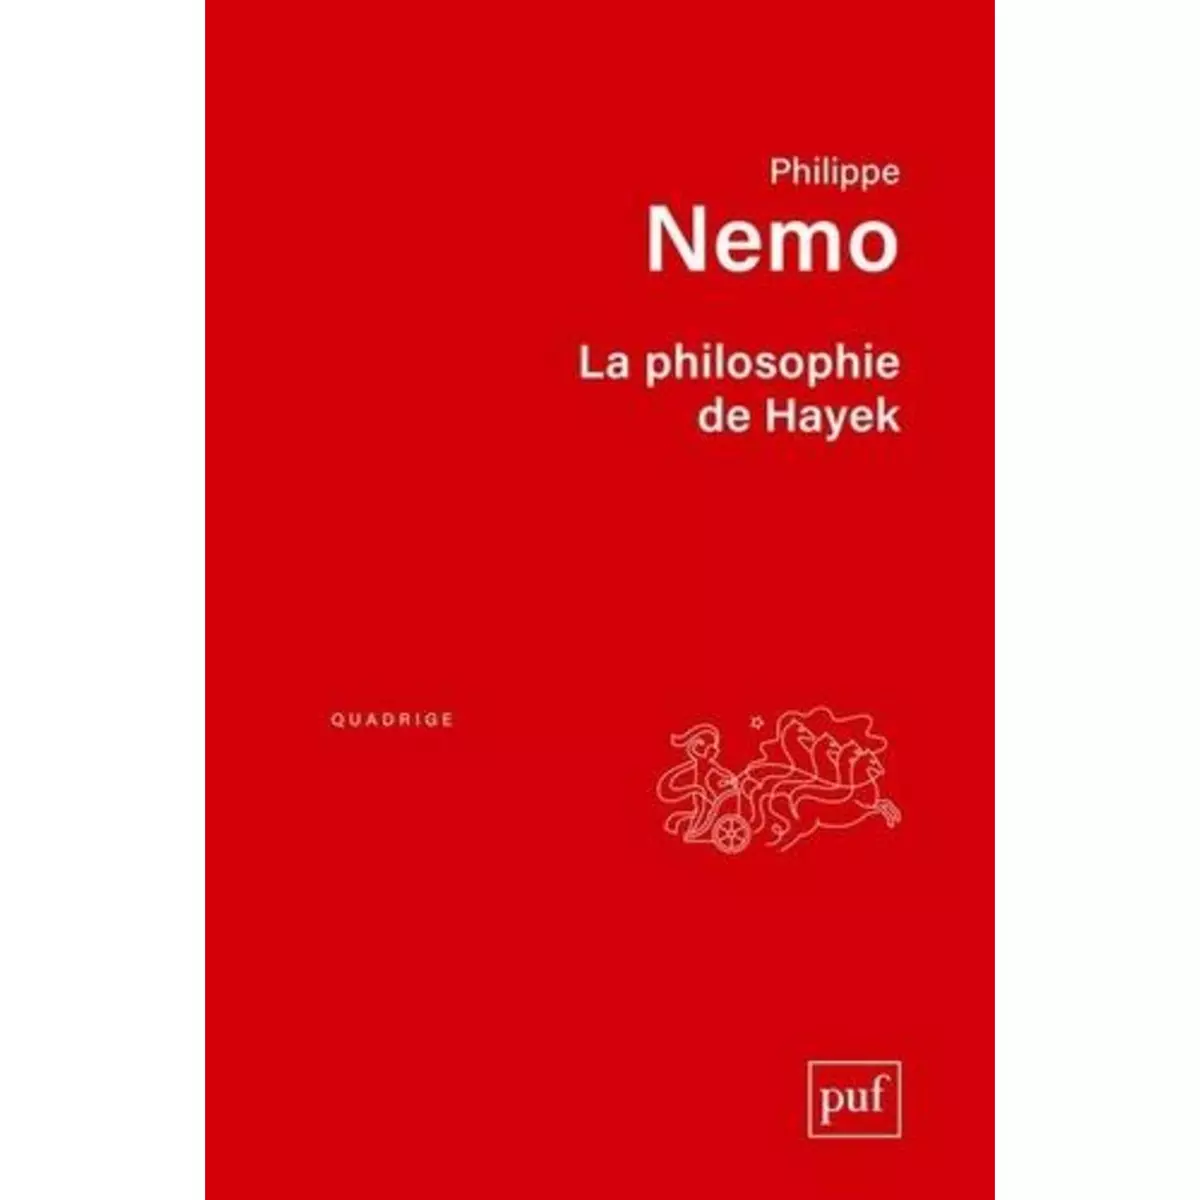  LA PHILOSOPHIE DE HAYEK, Nemo Philippe